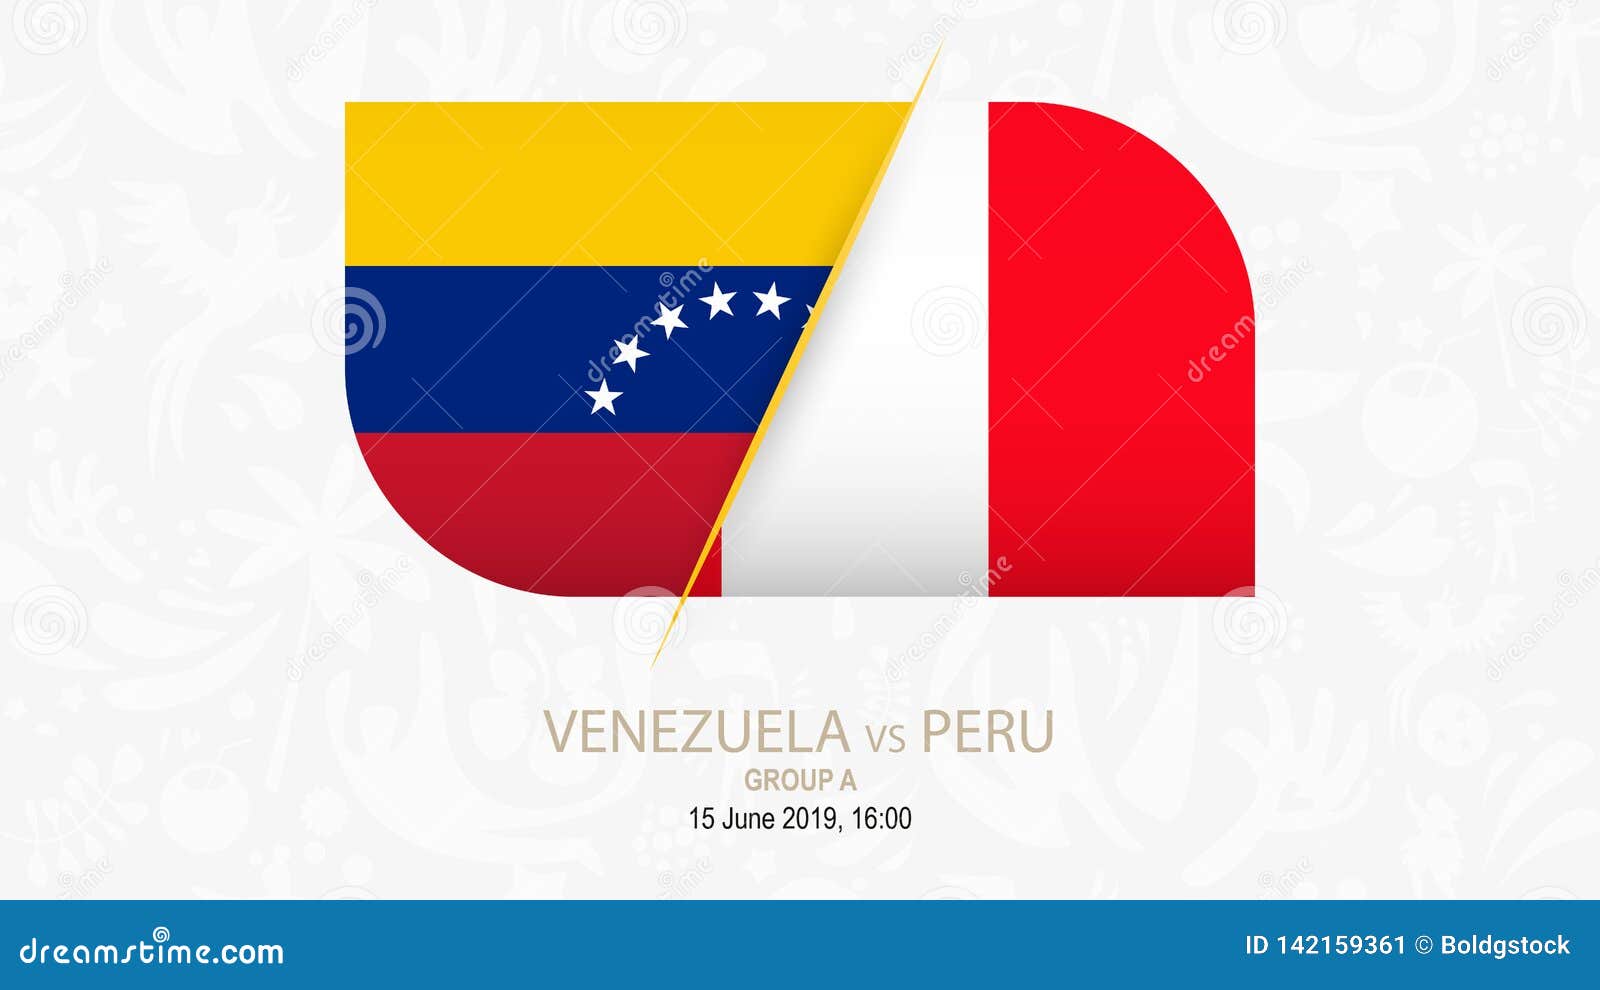 Venezuela vs peru